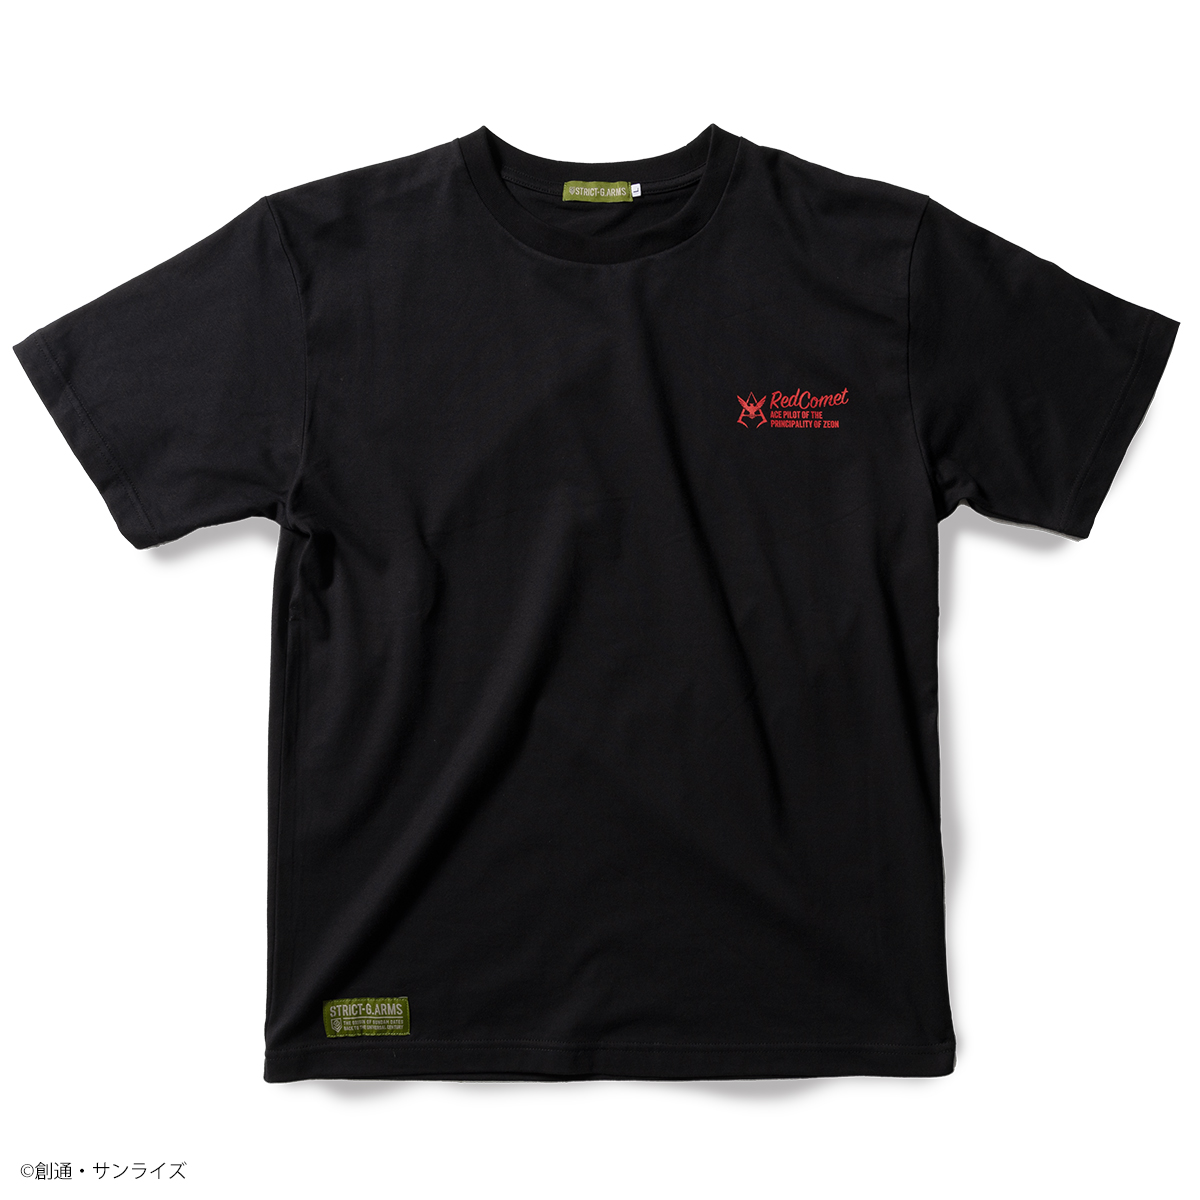 STRICT-G.ARMS『機動戦士ガンダム』ピンストライプ 半袖Tシャツ RED COMET